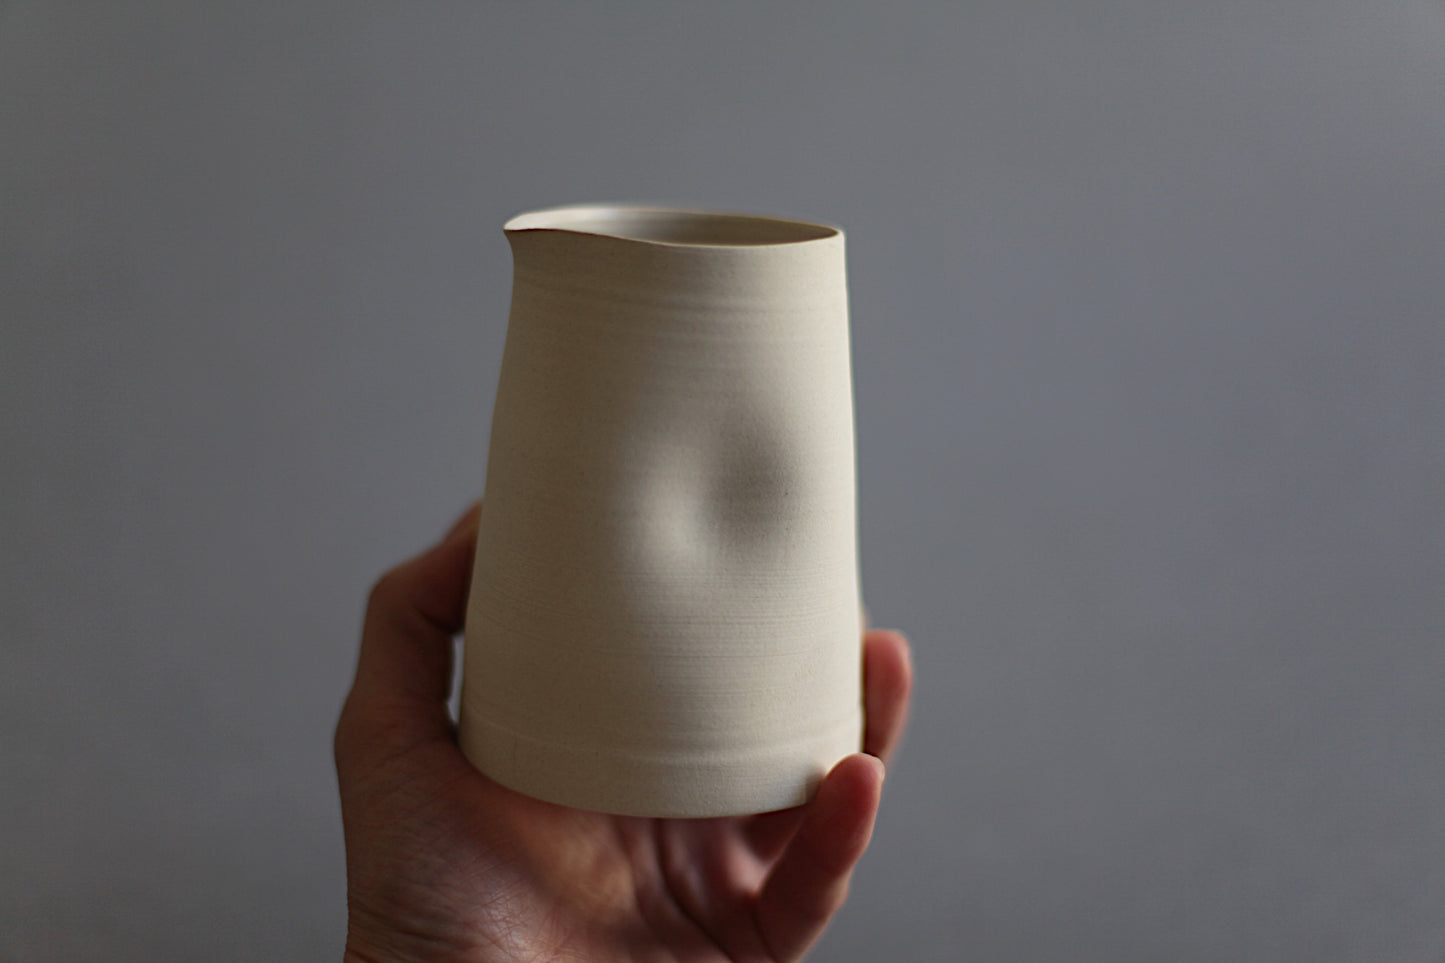 Ceramic pourer, fair cup - stoneware, 200 ml - 6.76 oz